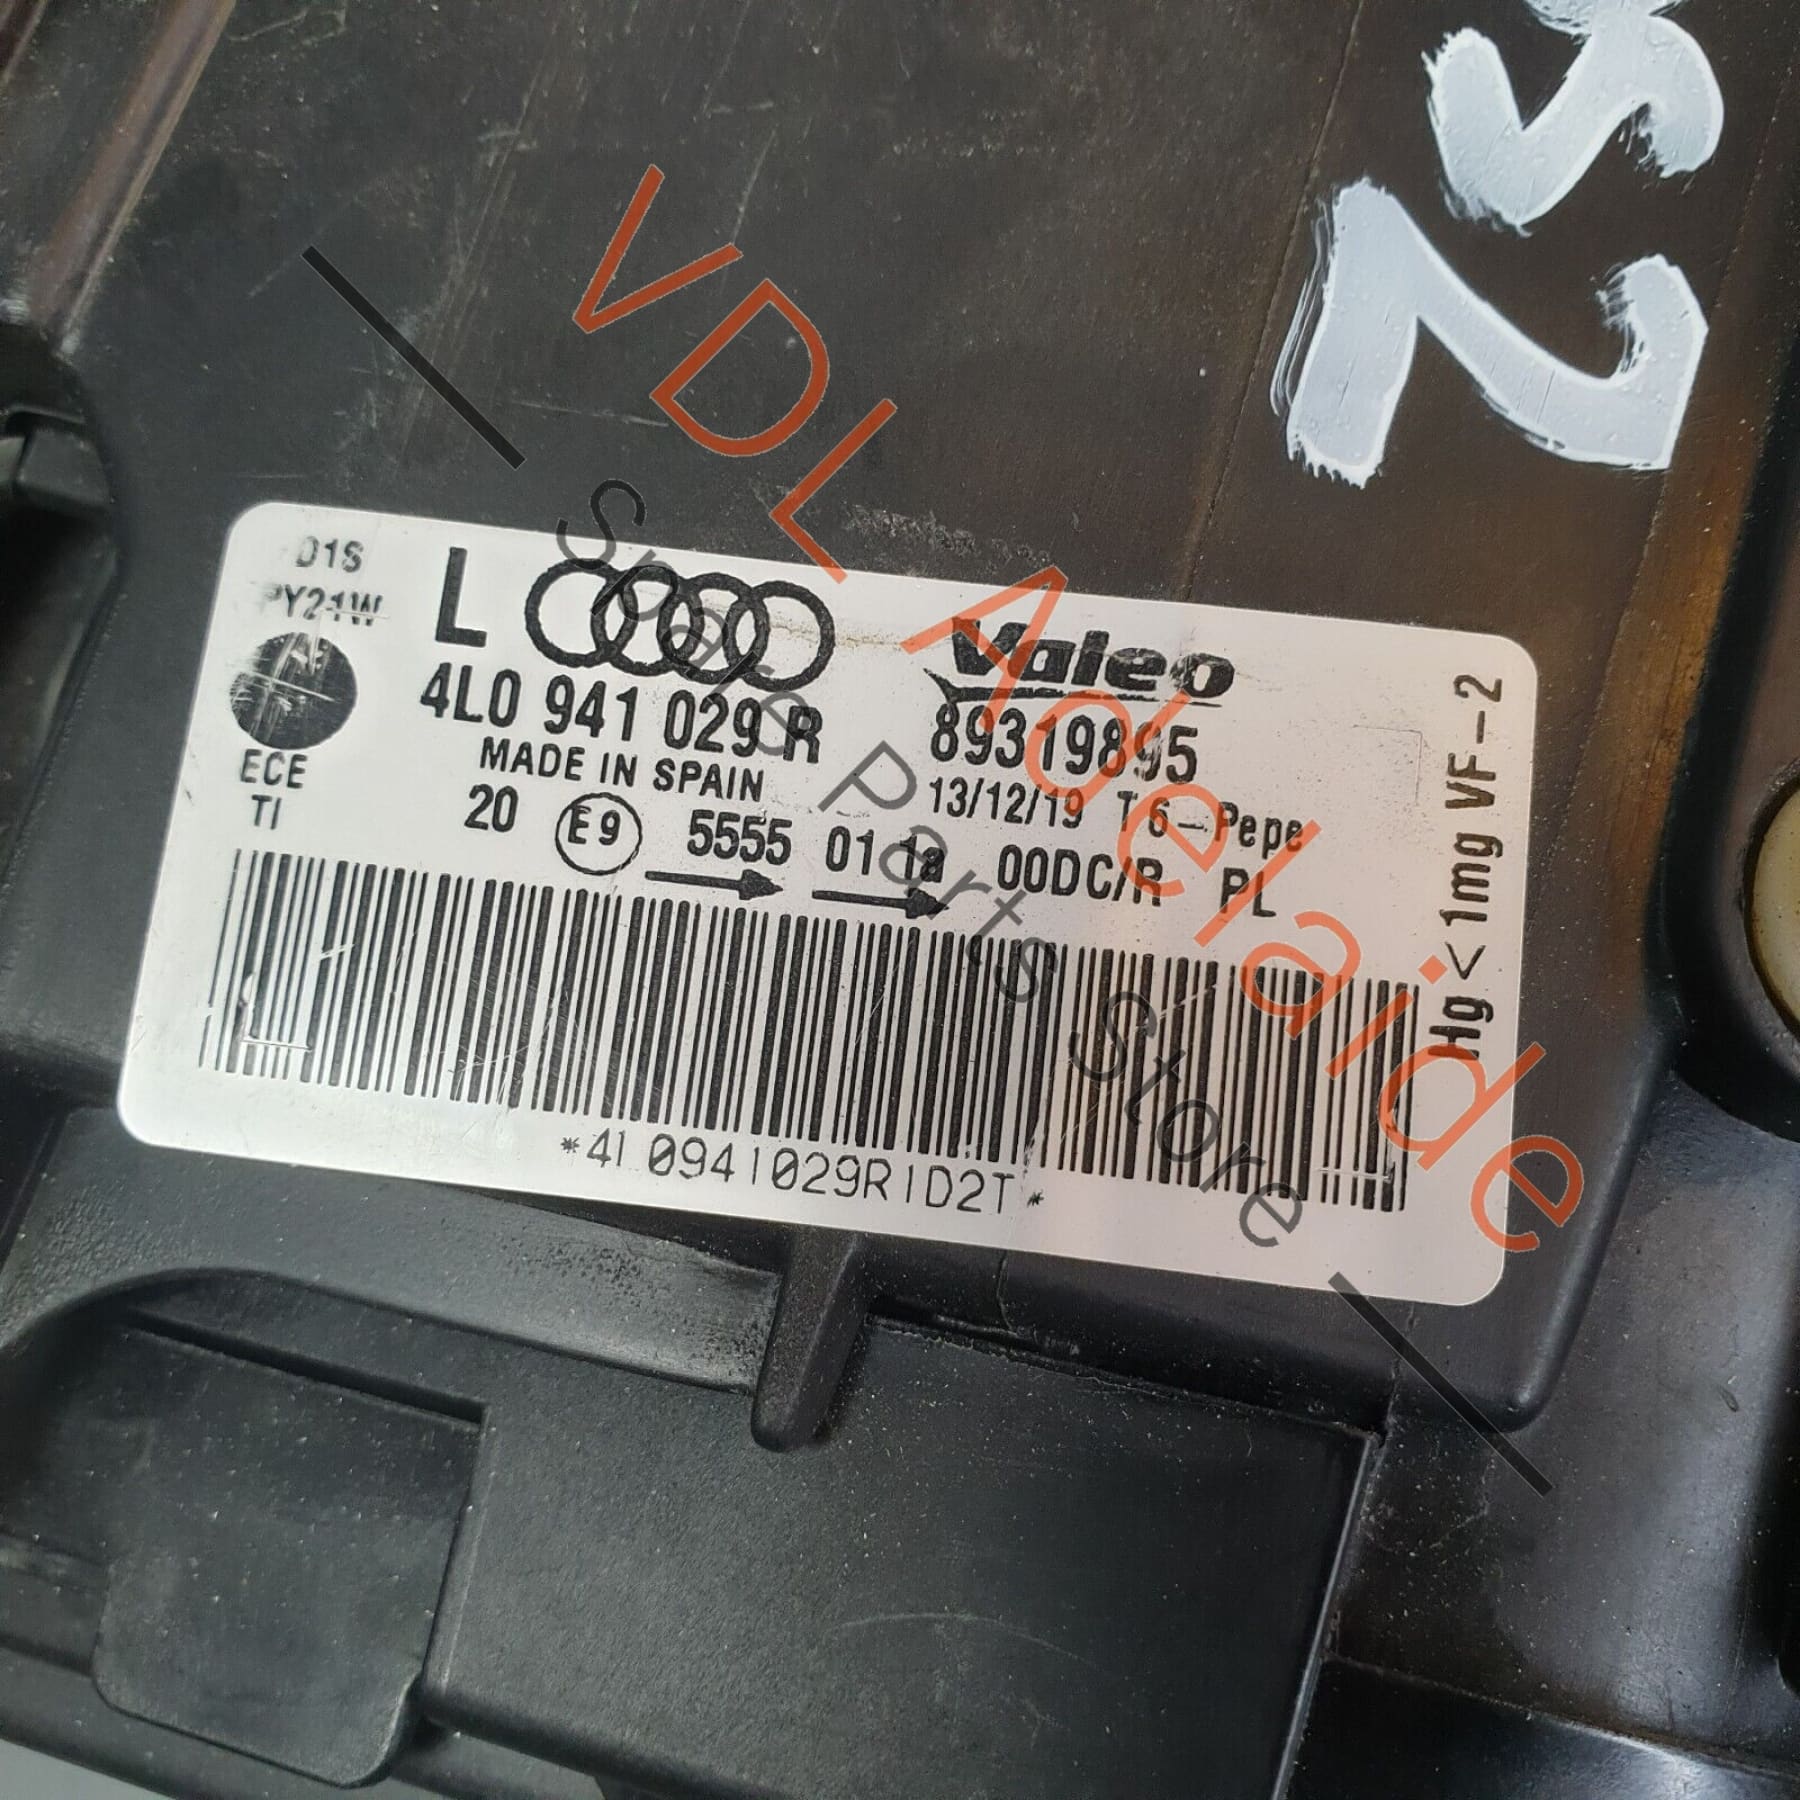 Audi Q7 6.0L V12 4L Complete Left LHS Headlight for V12 Models RHD 4L0941029R 4L0941029R